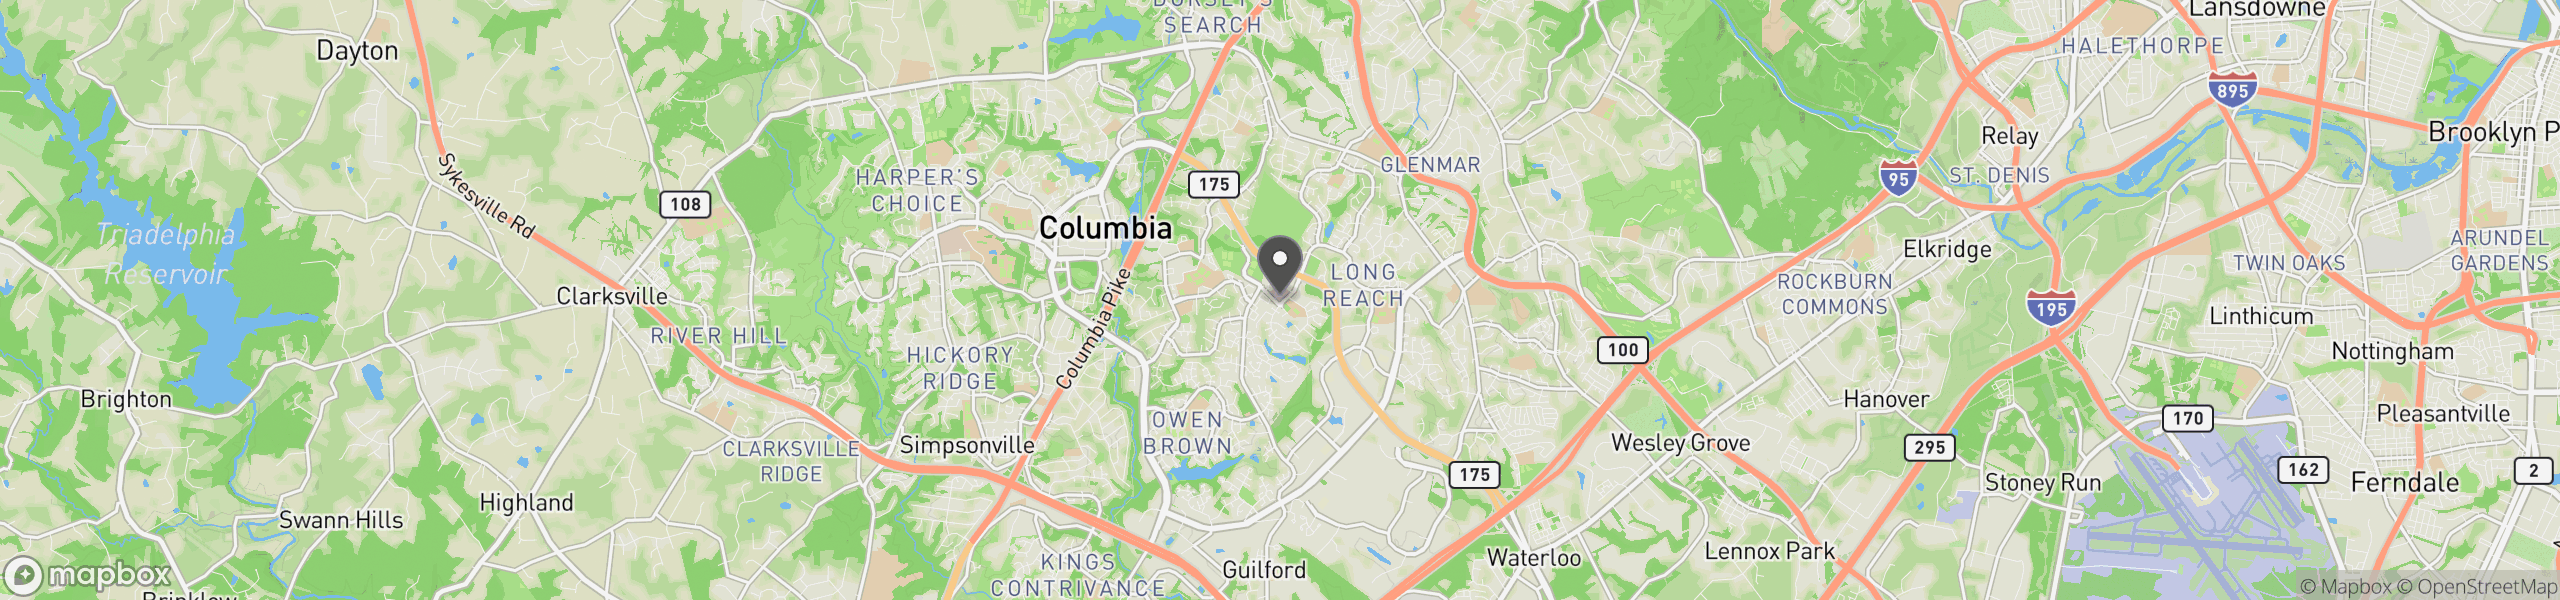 Columbia, MD 21045